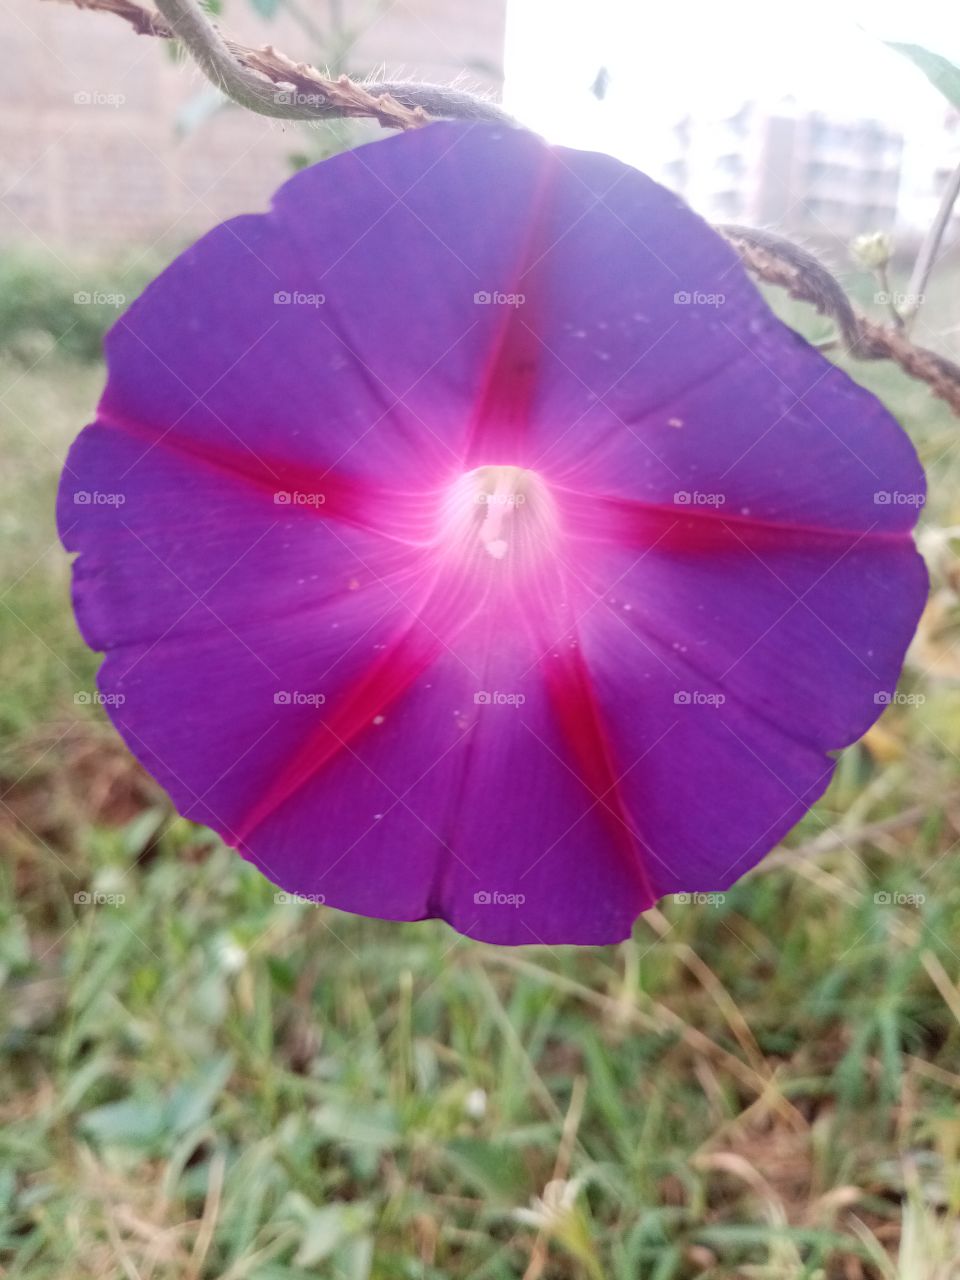 Amazing purple flower